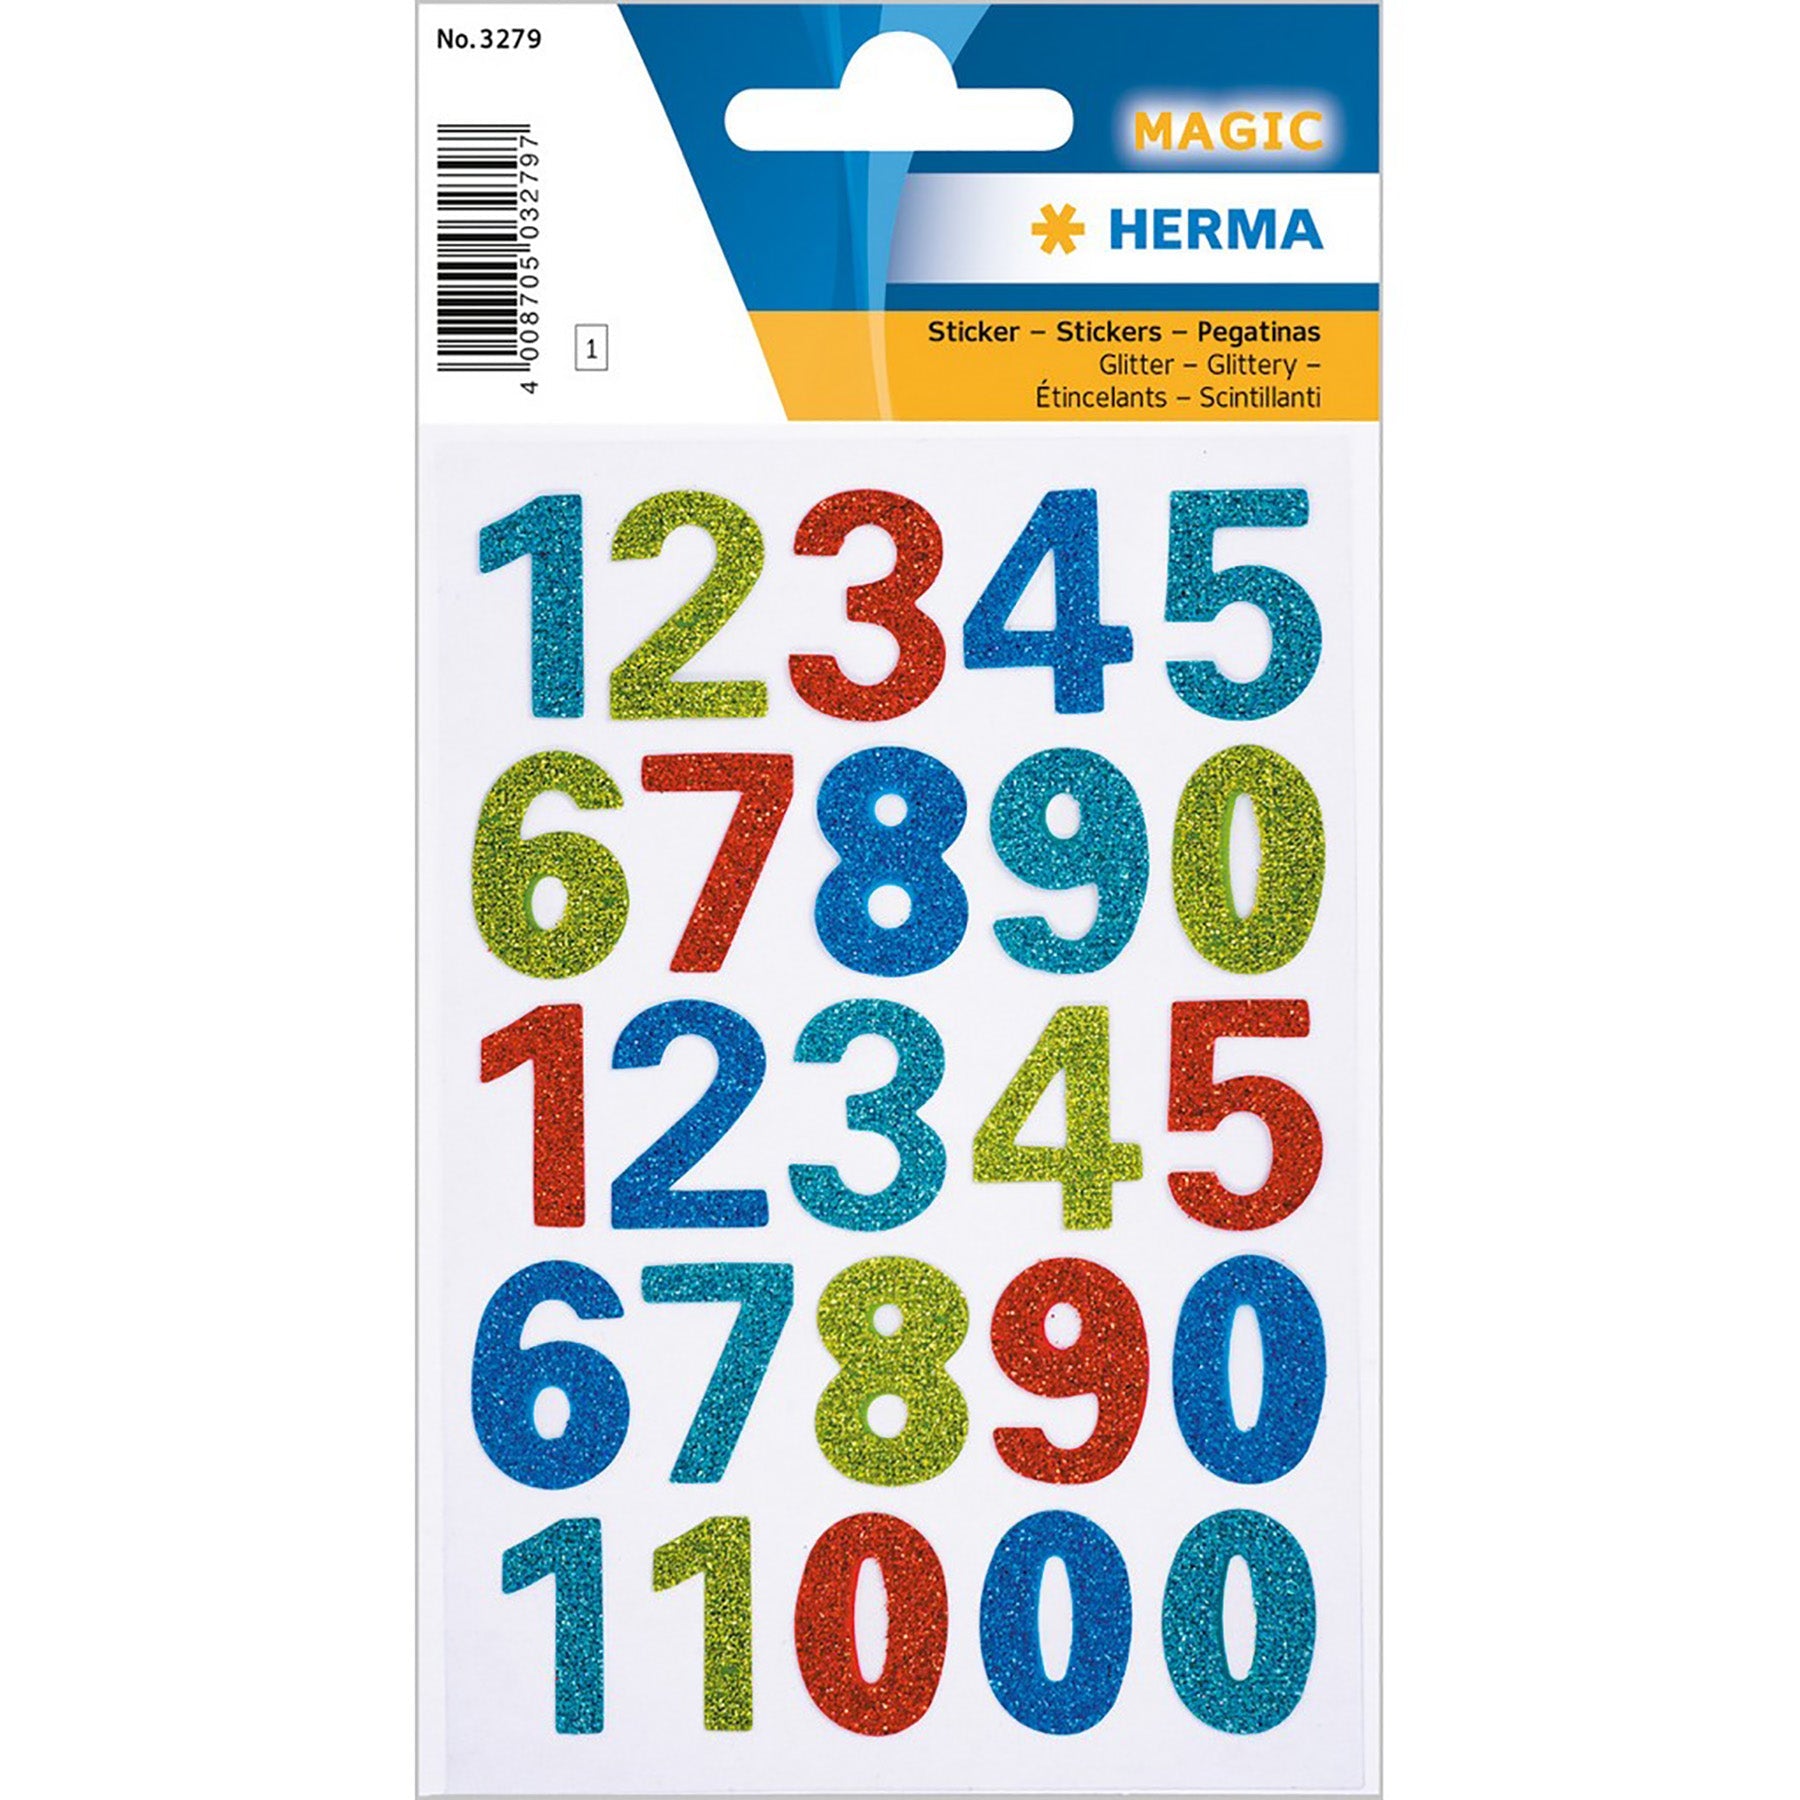 Herma Magic Stickers Numbers Glittery 0.75in each